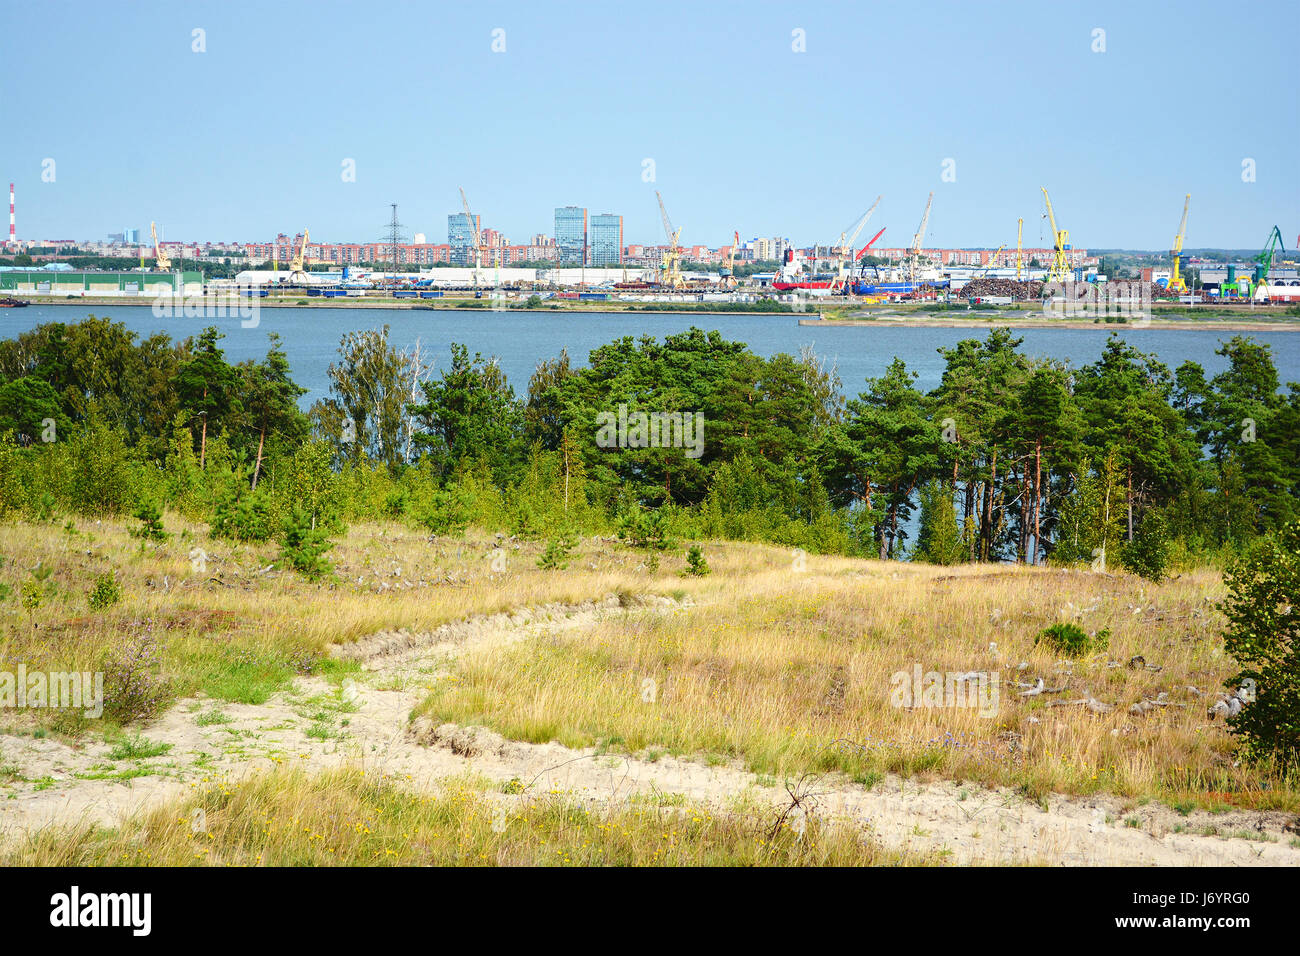 Port of Klaipeda, Lithuania Stock Photo